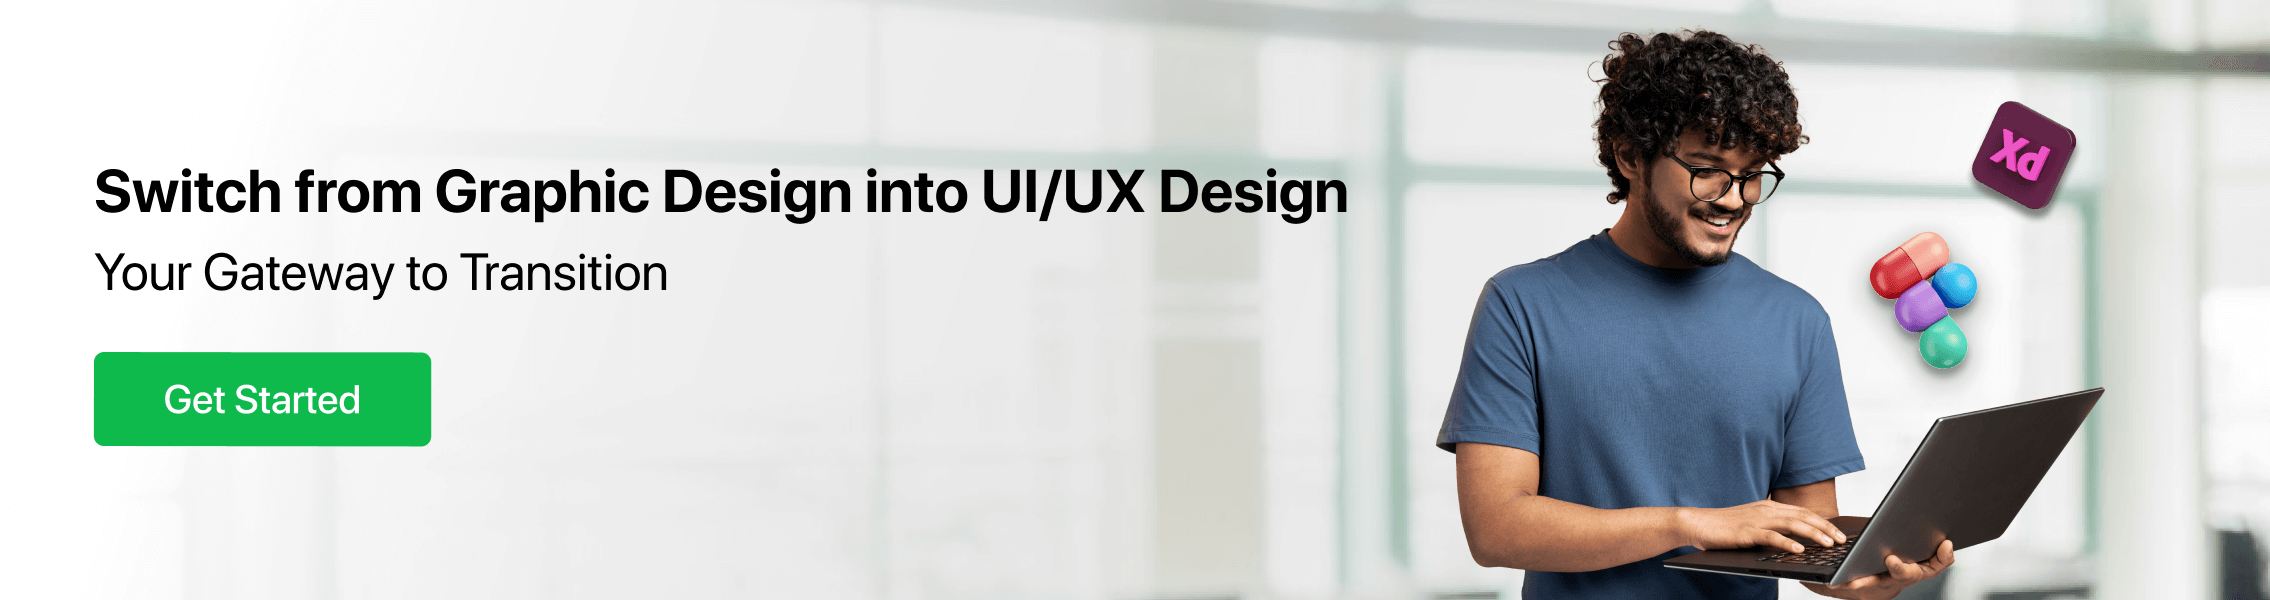 graphic design to ui ux design horizontal banner